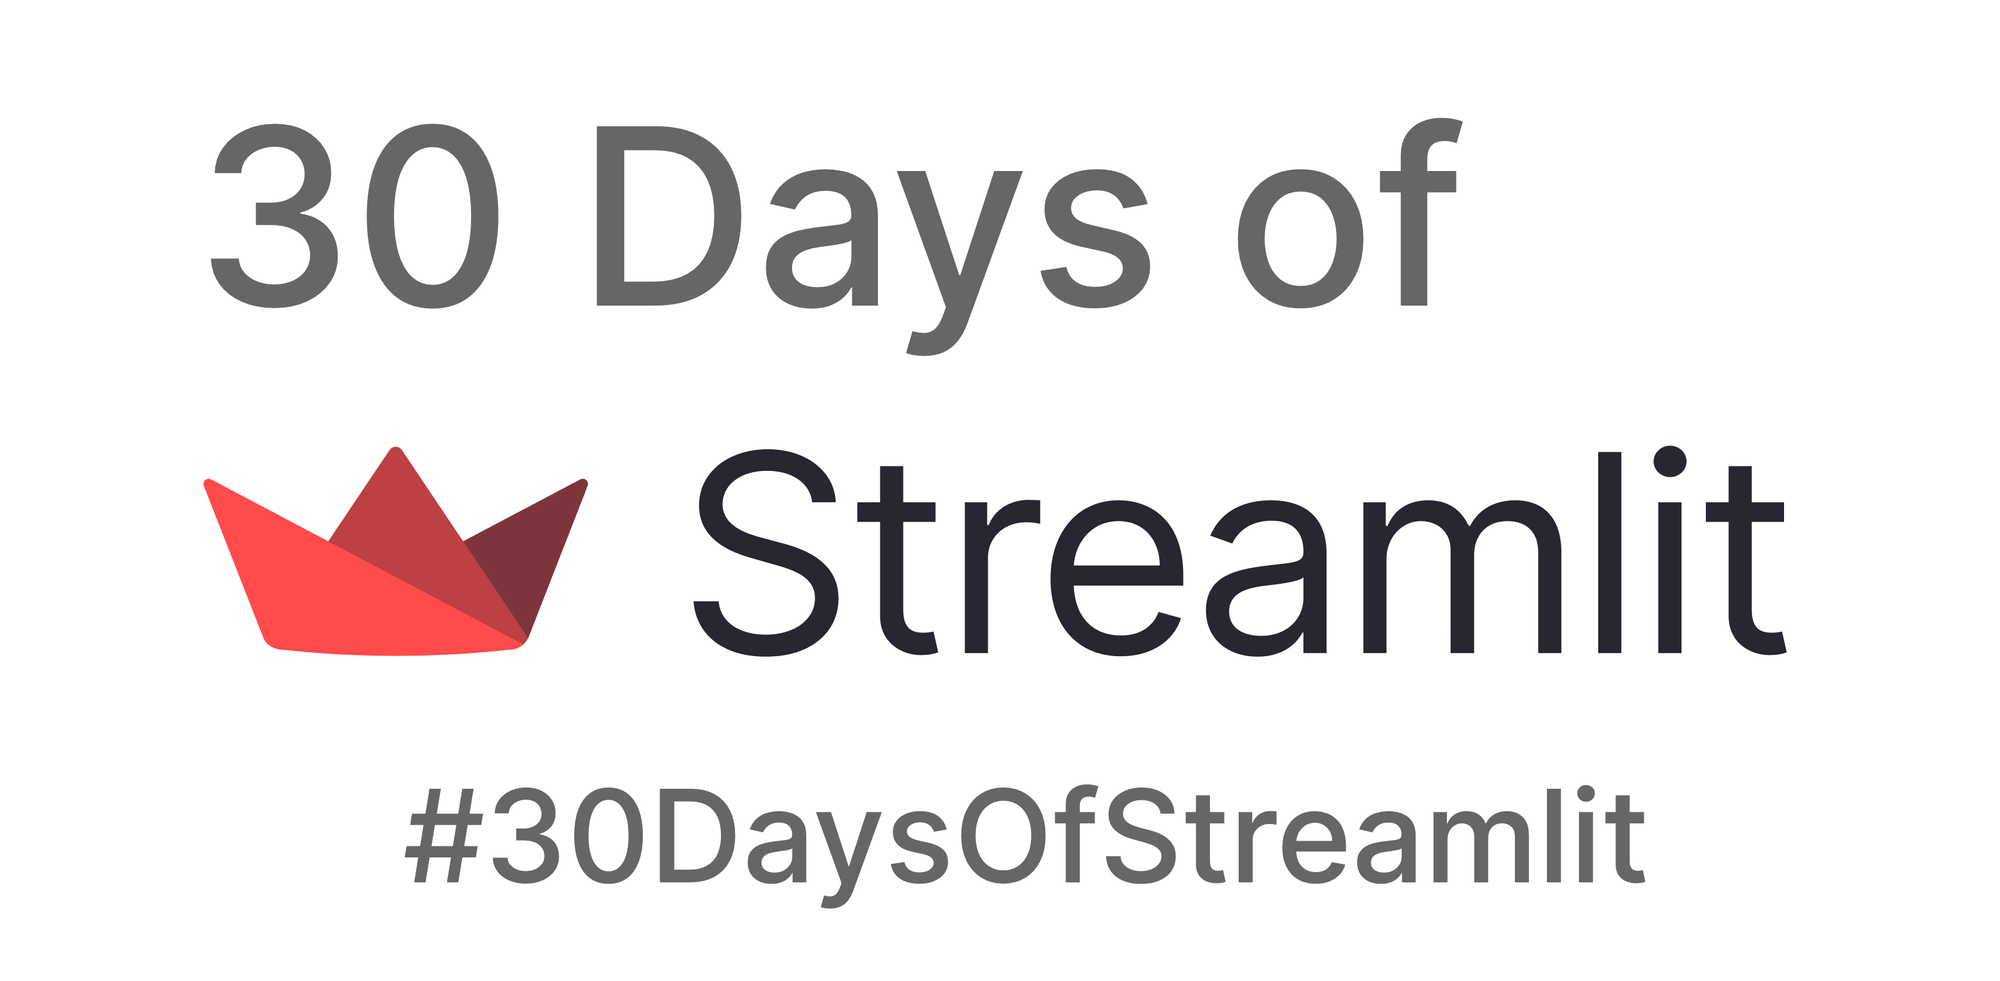 30 Days of Streamlit